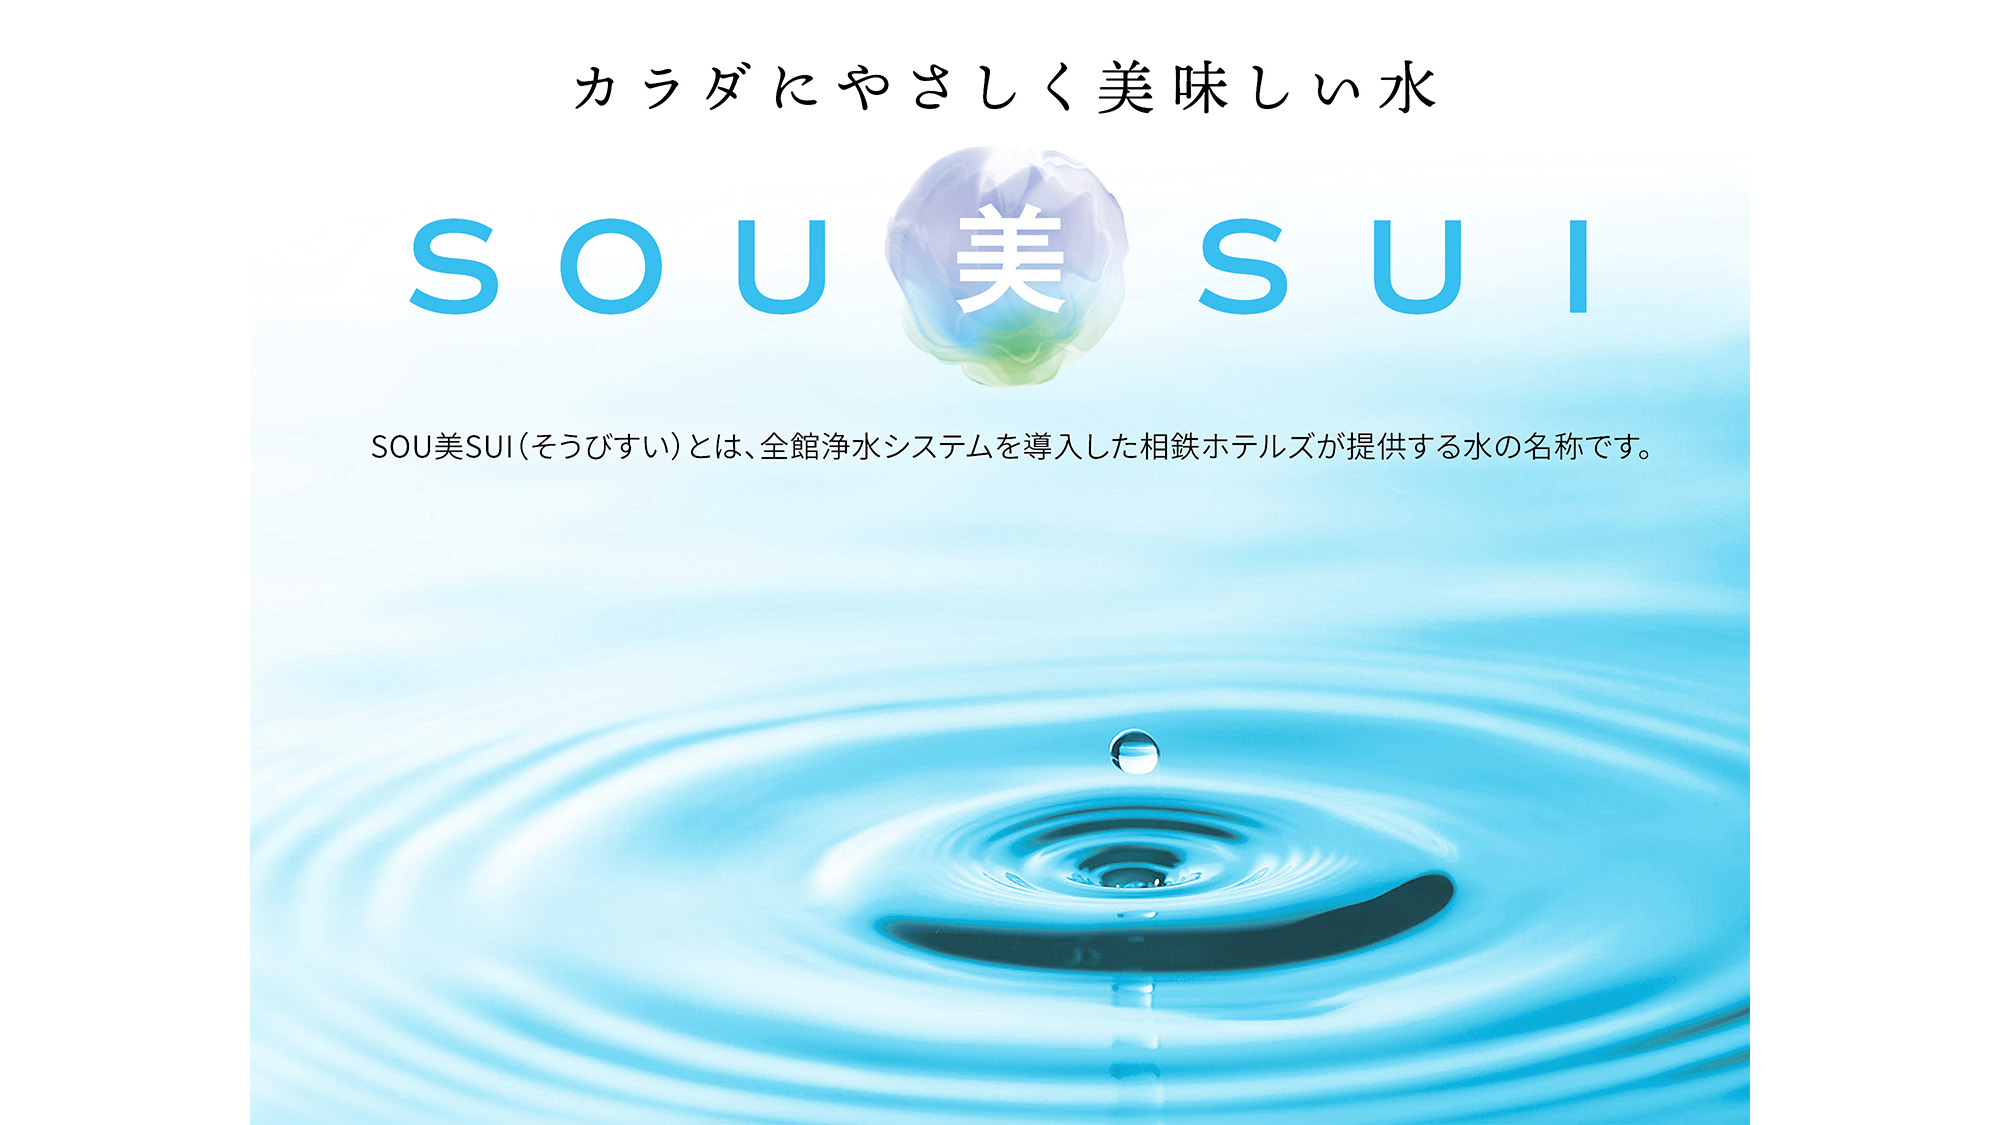 ・【SOU美SUI】全館浄水システム導入により、カラダにやさしく美味しい水を供給